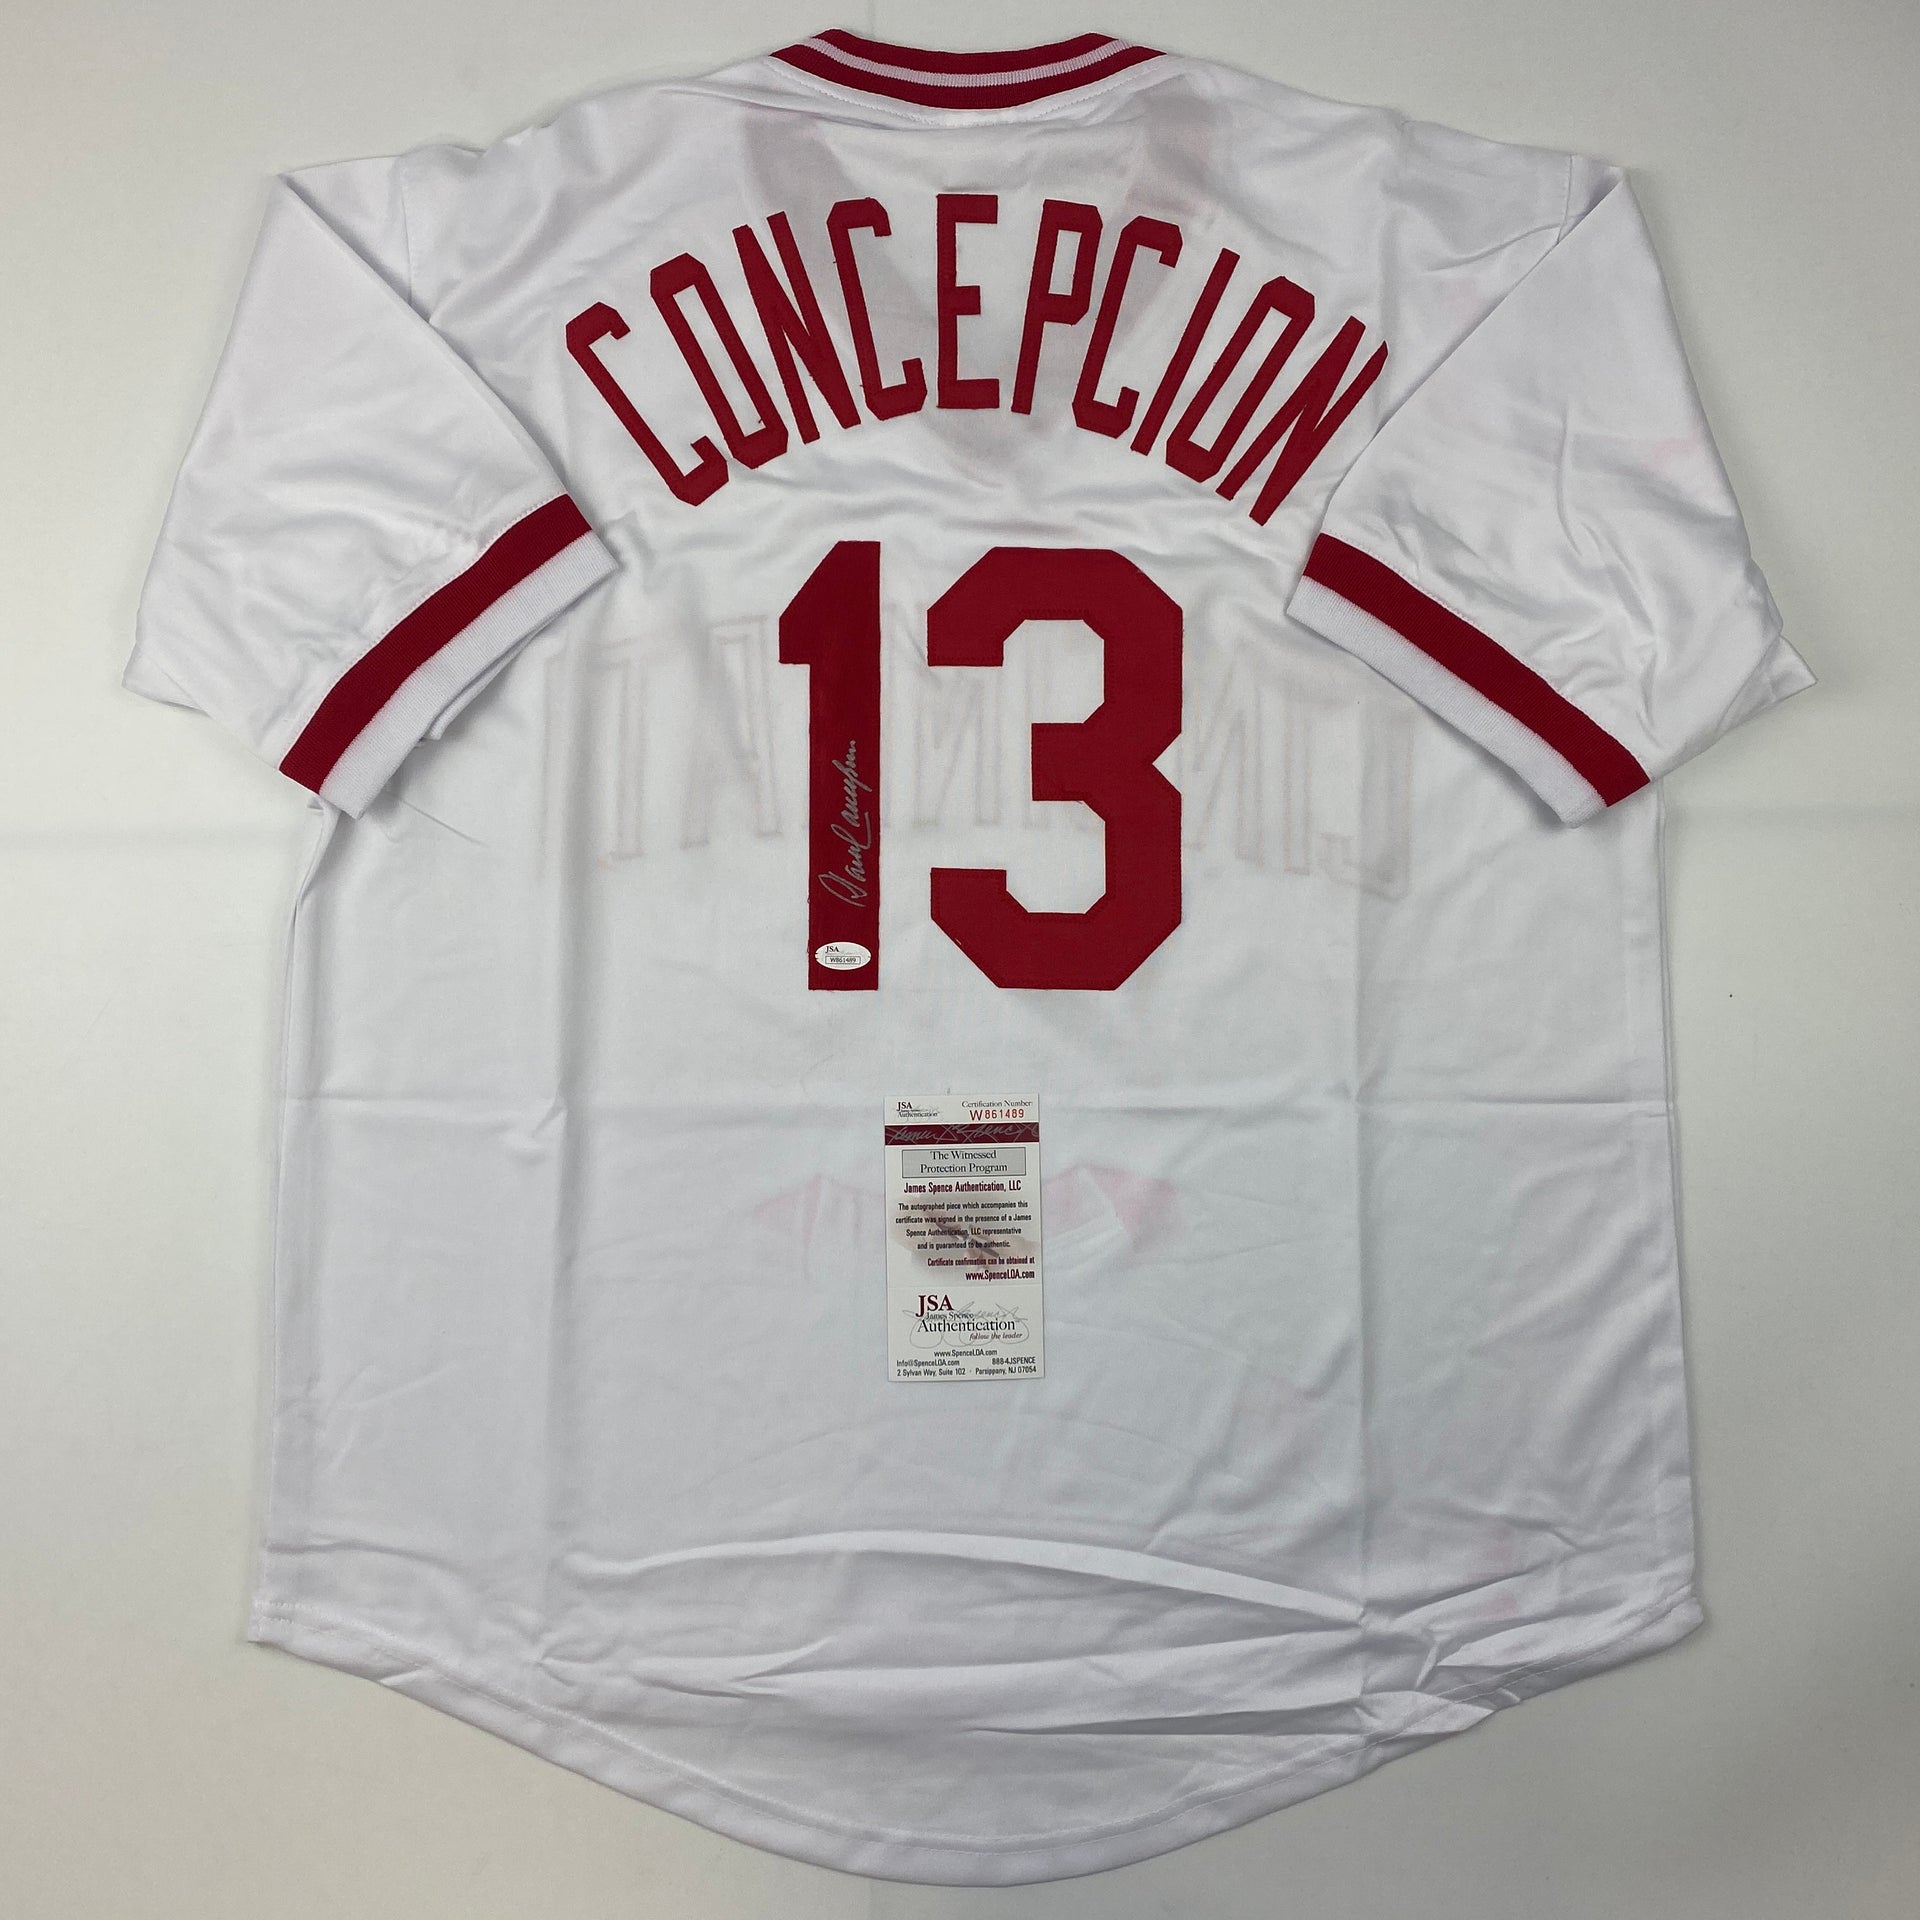 Autographed/Signed Dave Concepcion Cincinnati White Baseball